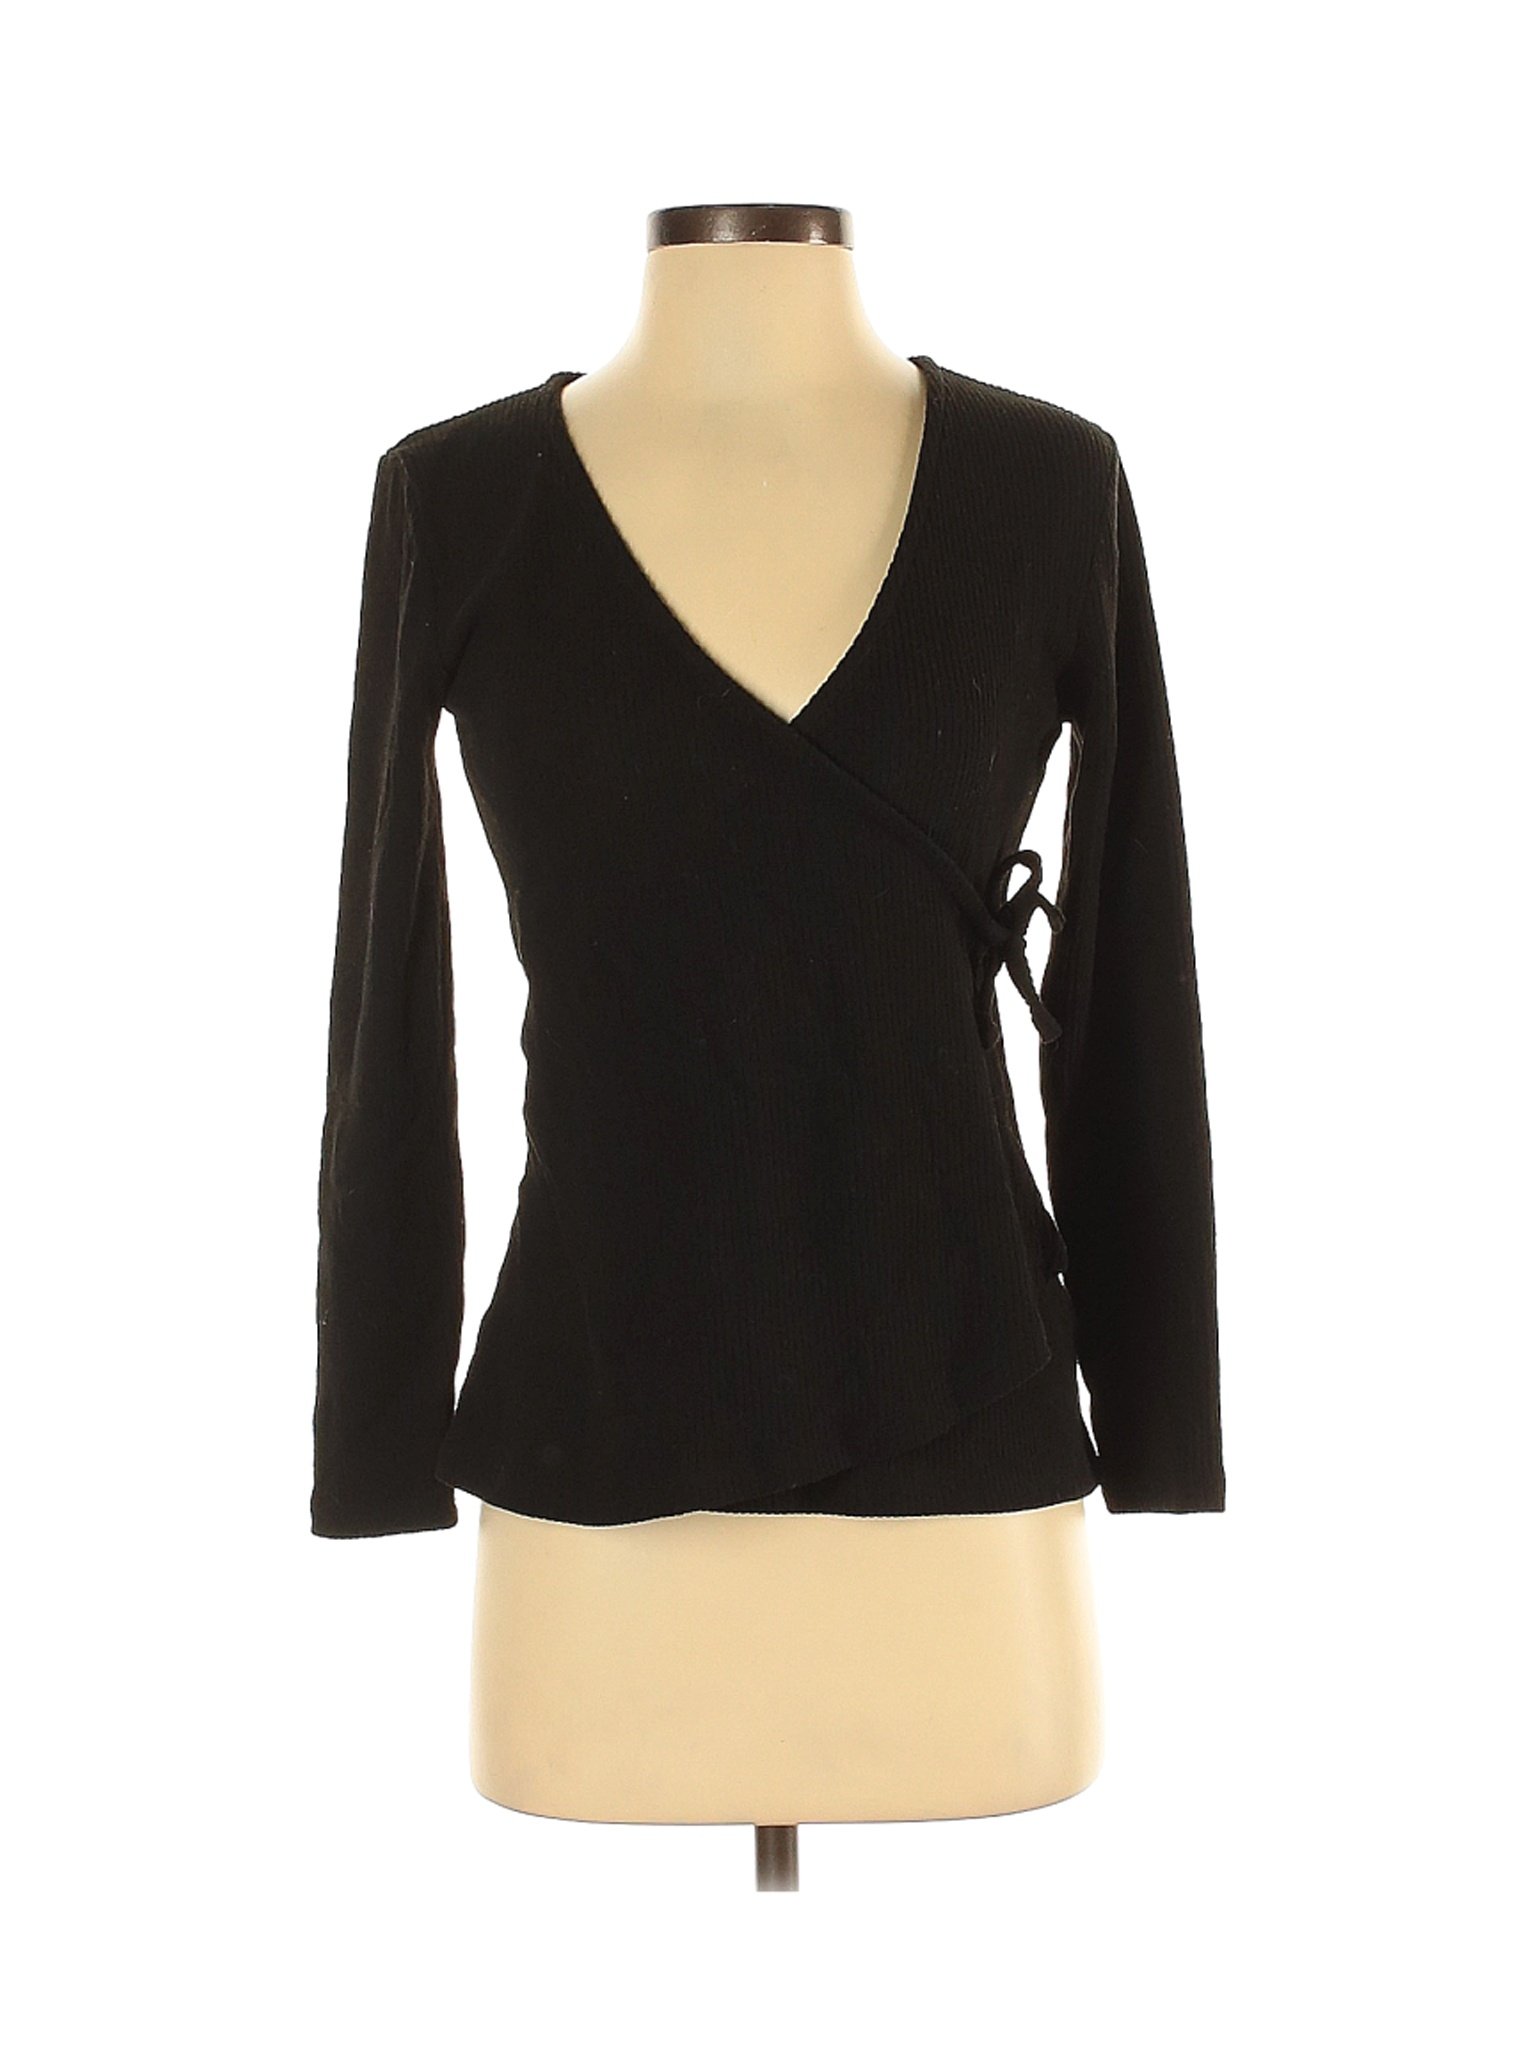 Old Navy Women Black Long Sleeve Top S | eBay